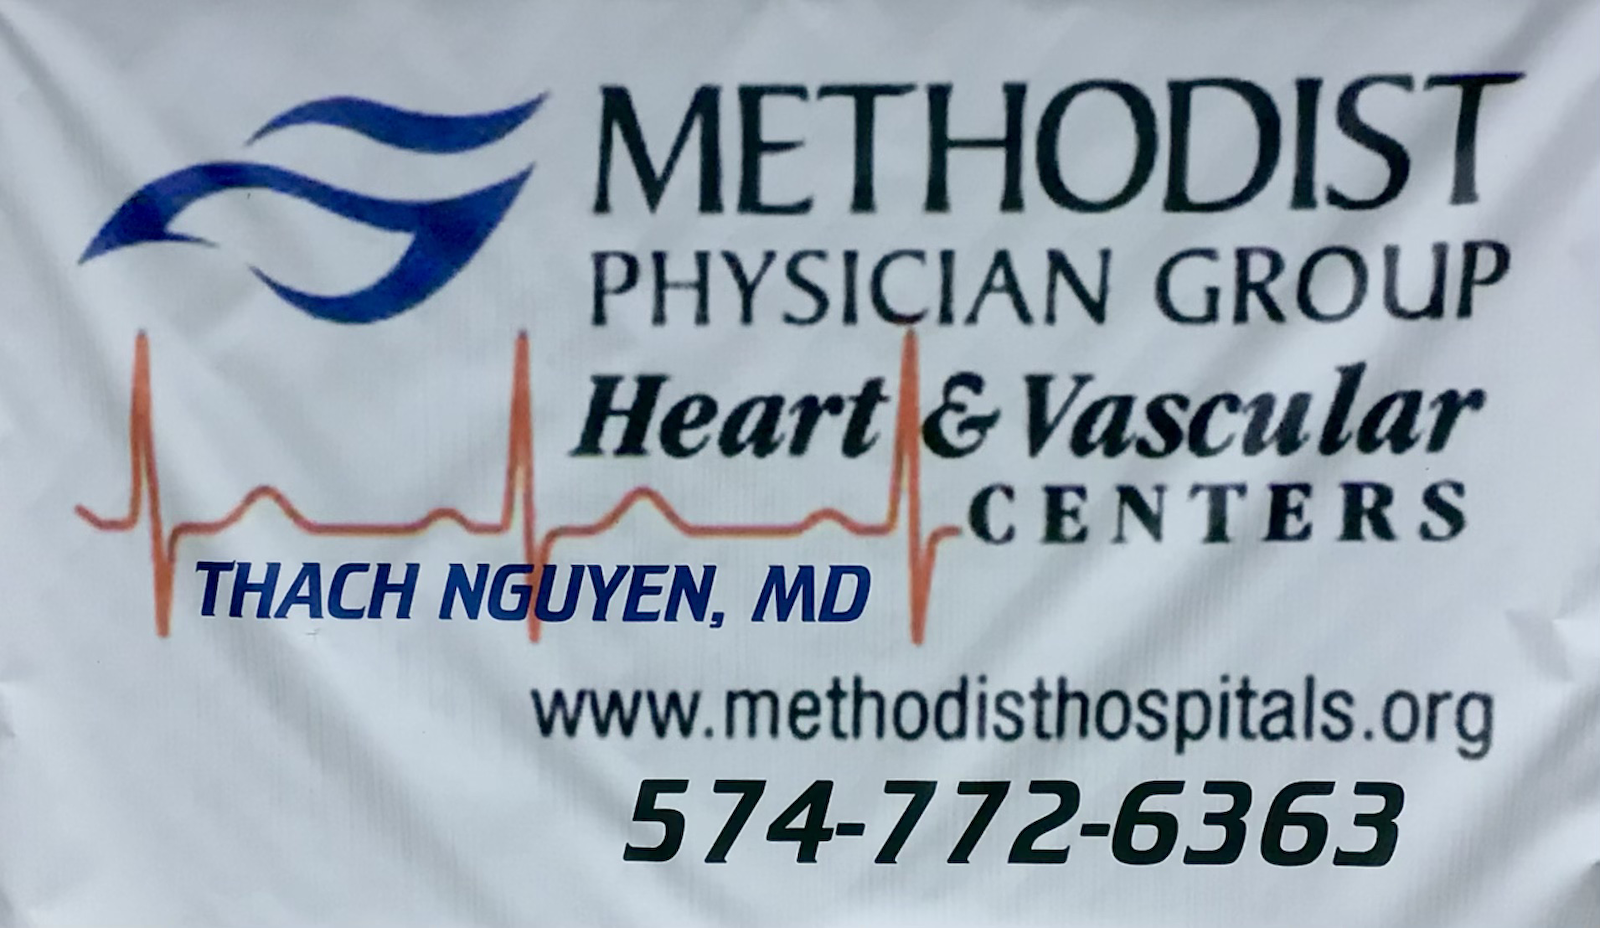 Methodist Physician Group